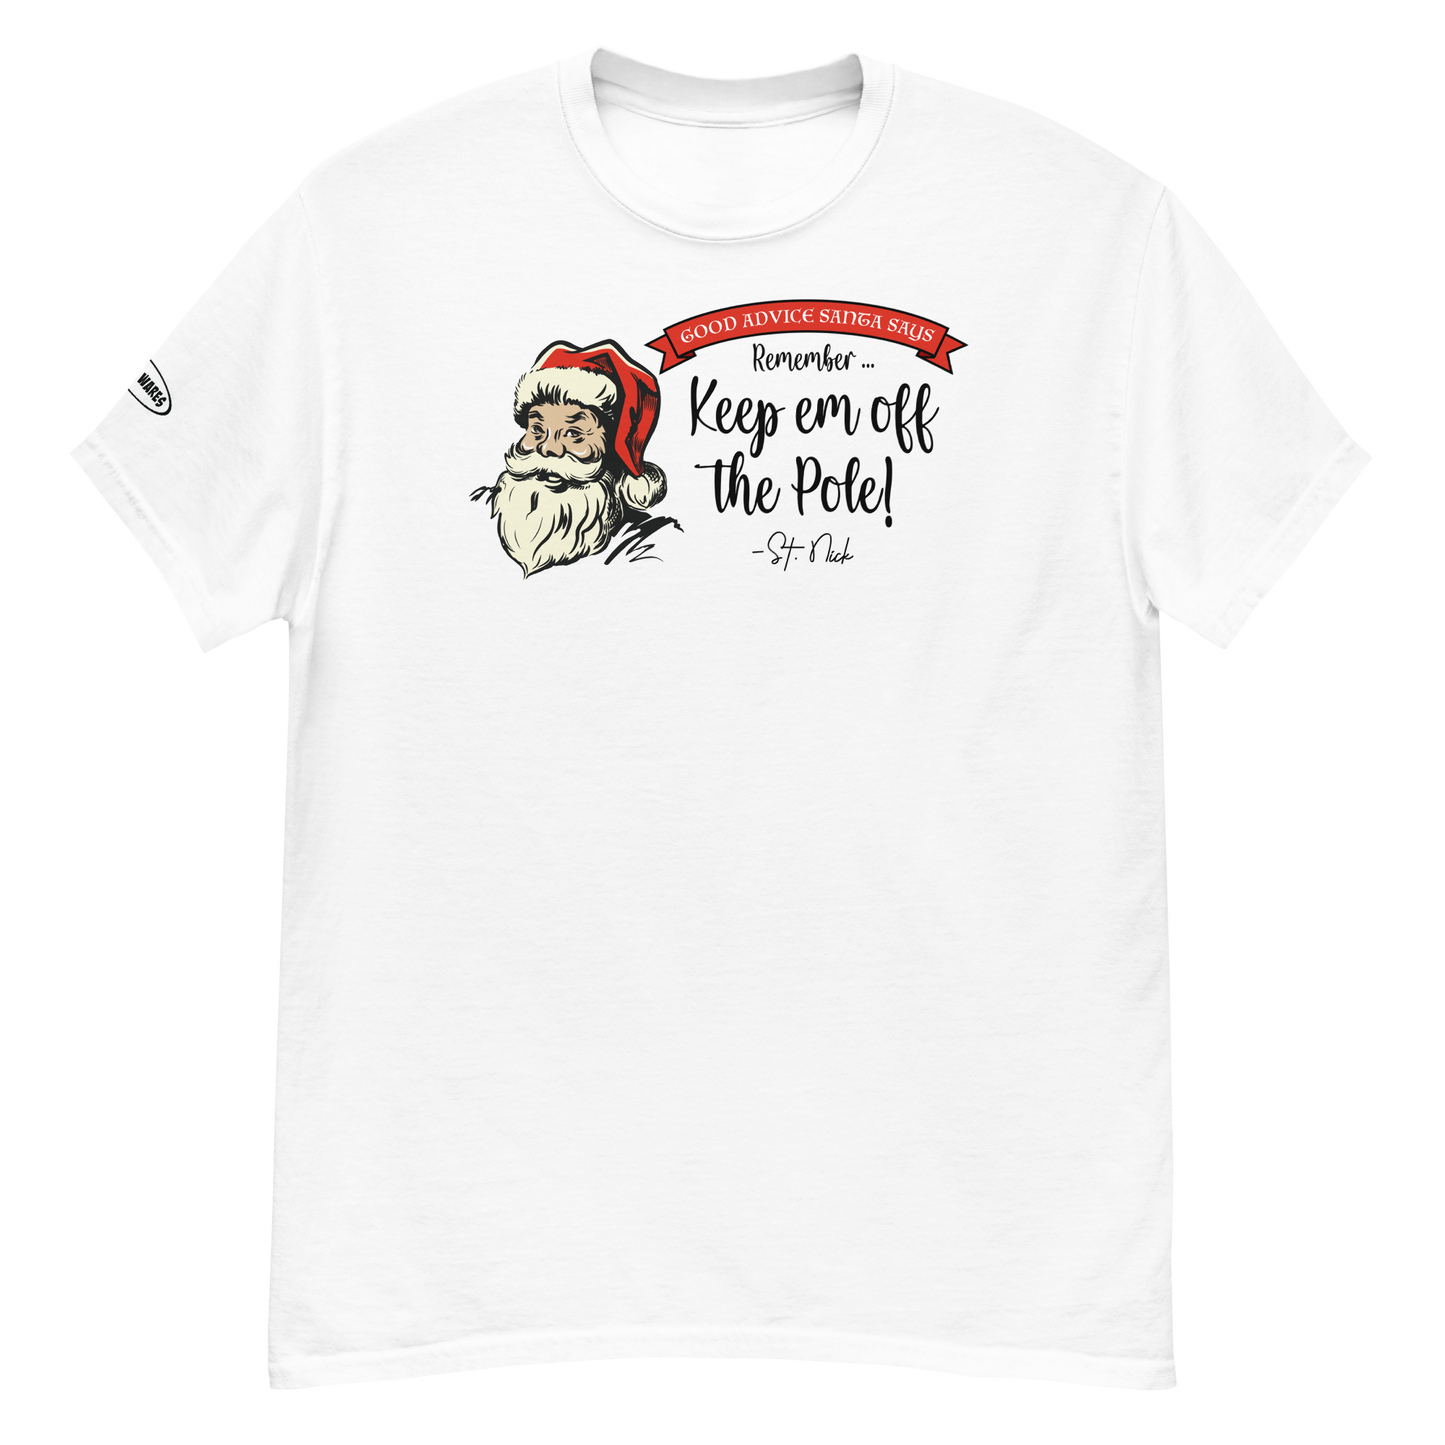 Unisex - CHRISTMAS - Good Advice Santa Says: Remember, Keep em off the Pole! - Funny t-shirt